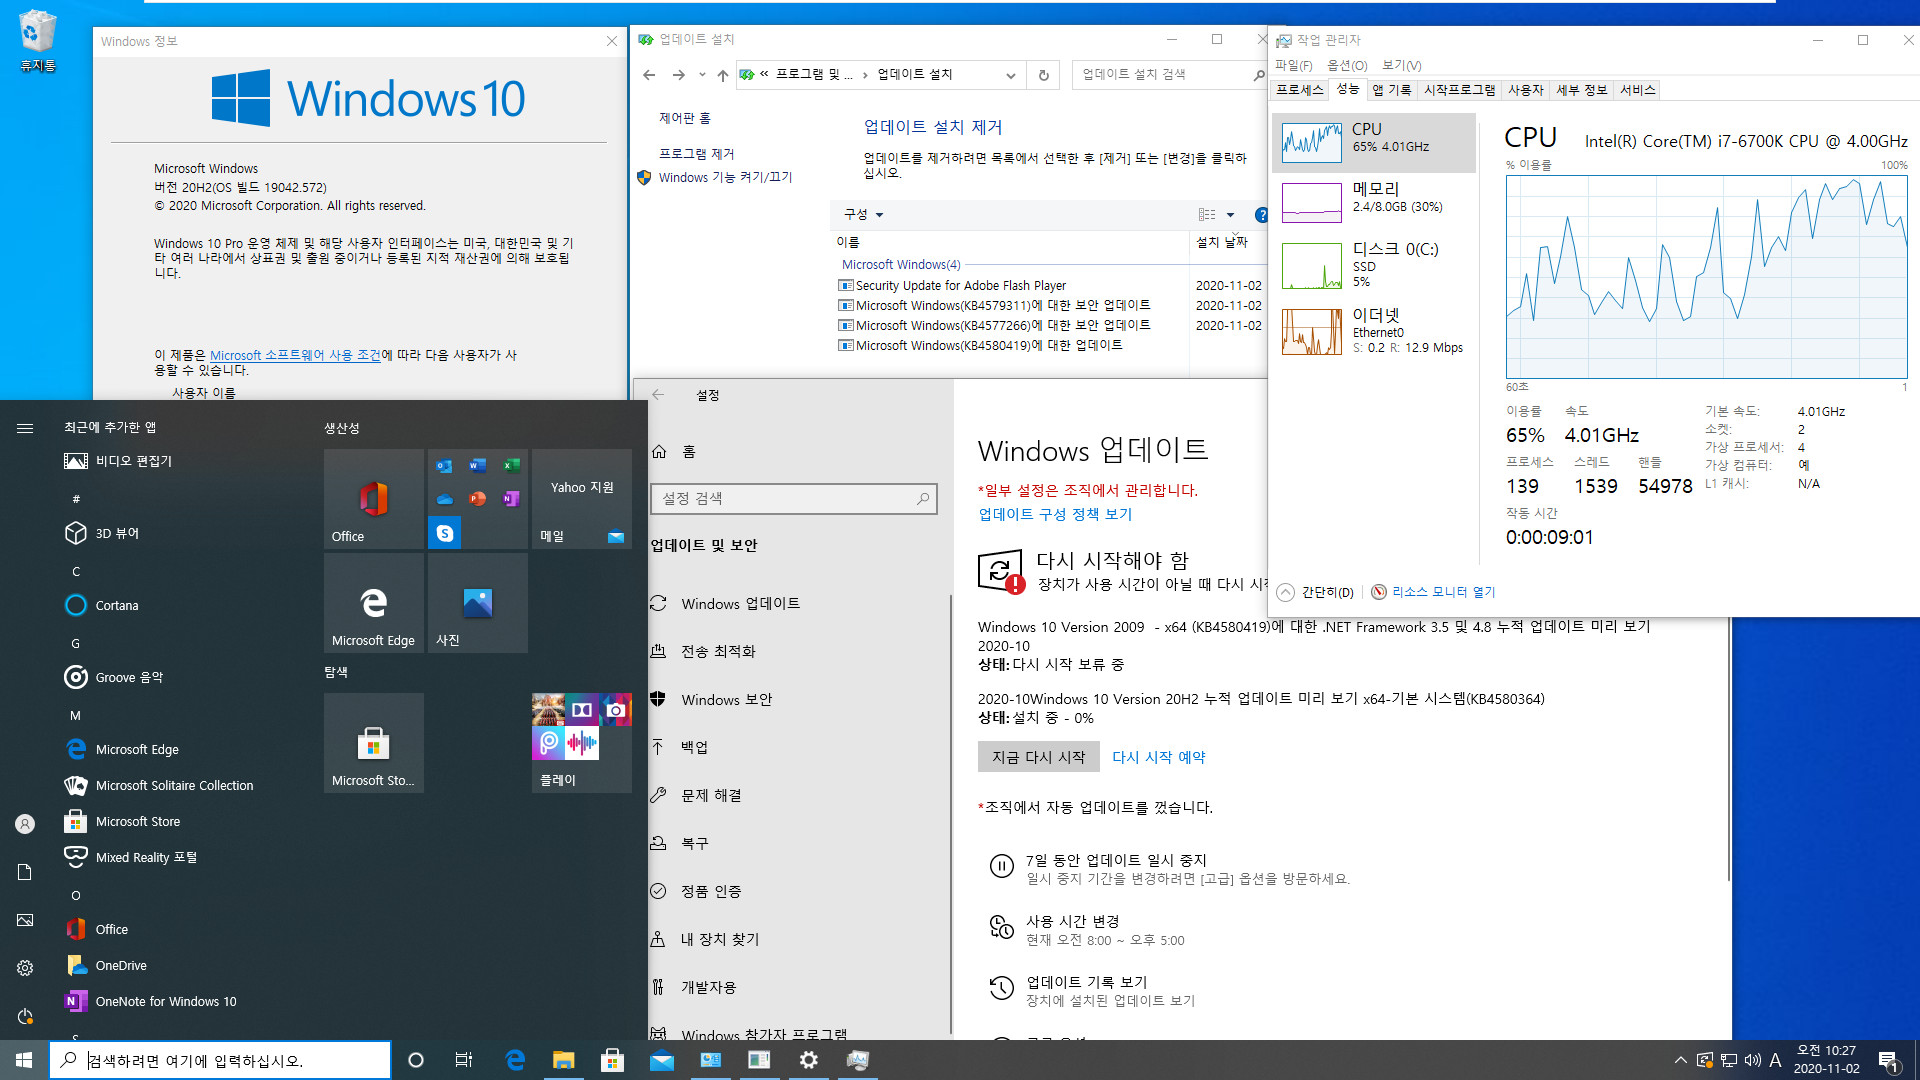 Windows 10 버전 20H2 기능 업데이트 KB4562830 폴더의 mum 파일들만 찾아서 설치하기.bat - 크로미엄 엣지 설치하지 않고 버전 20H2만 설치하기 테스트 - 뻘짓했네요 2020-11-02_102800.jpg